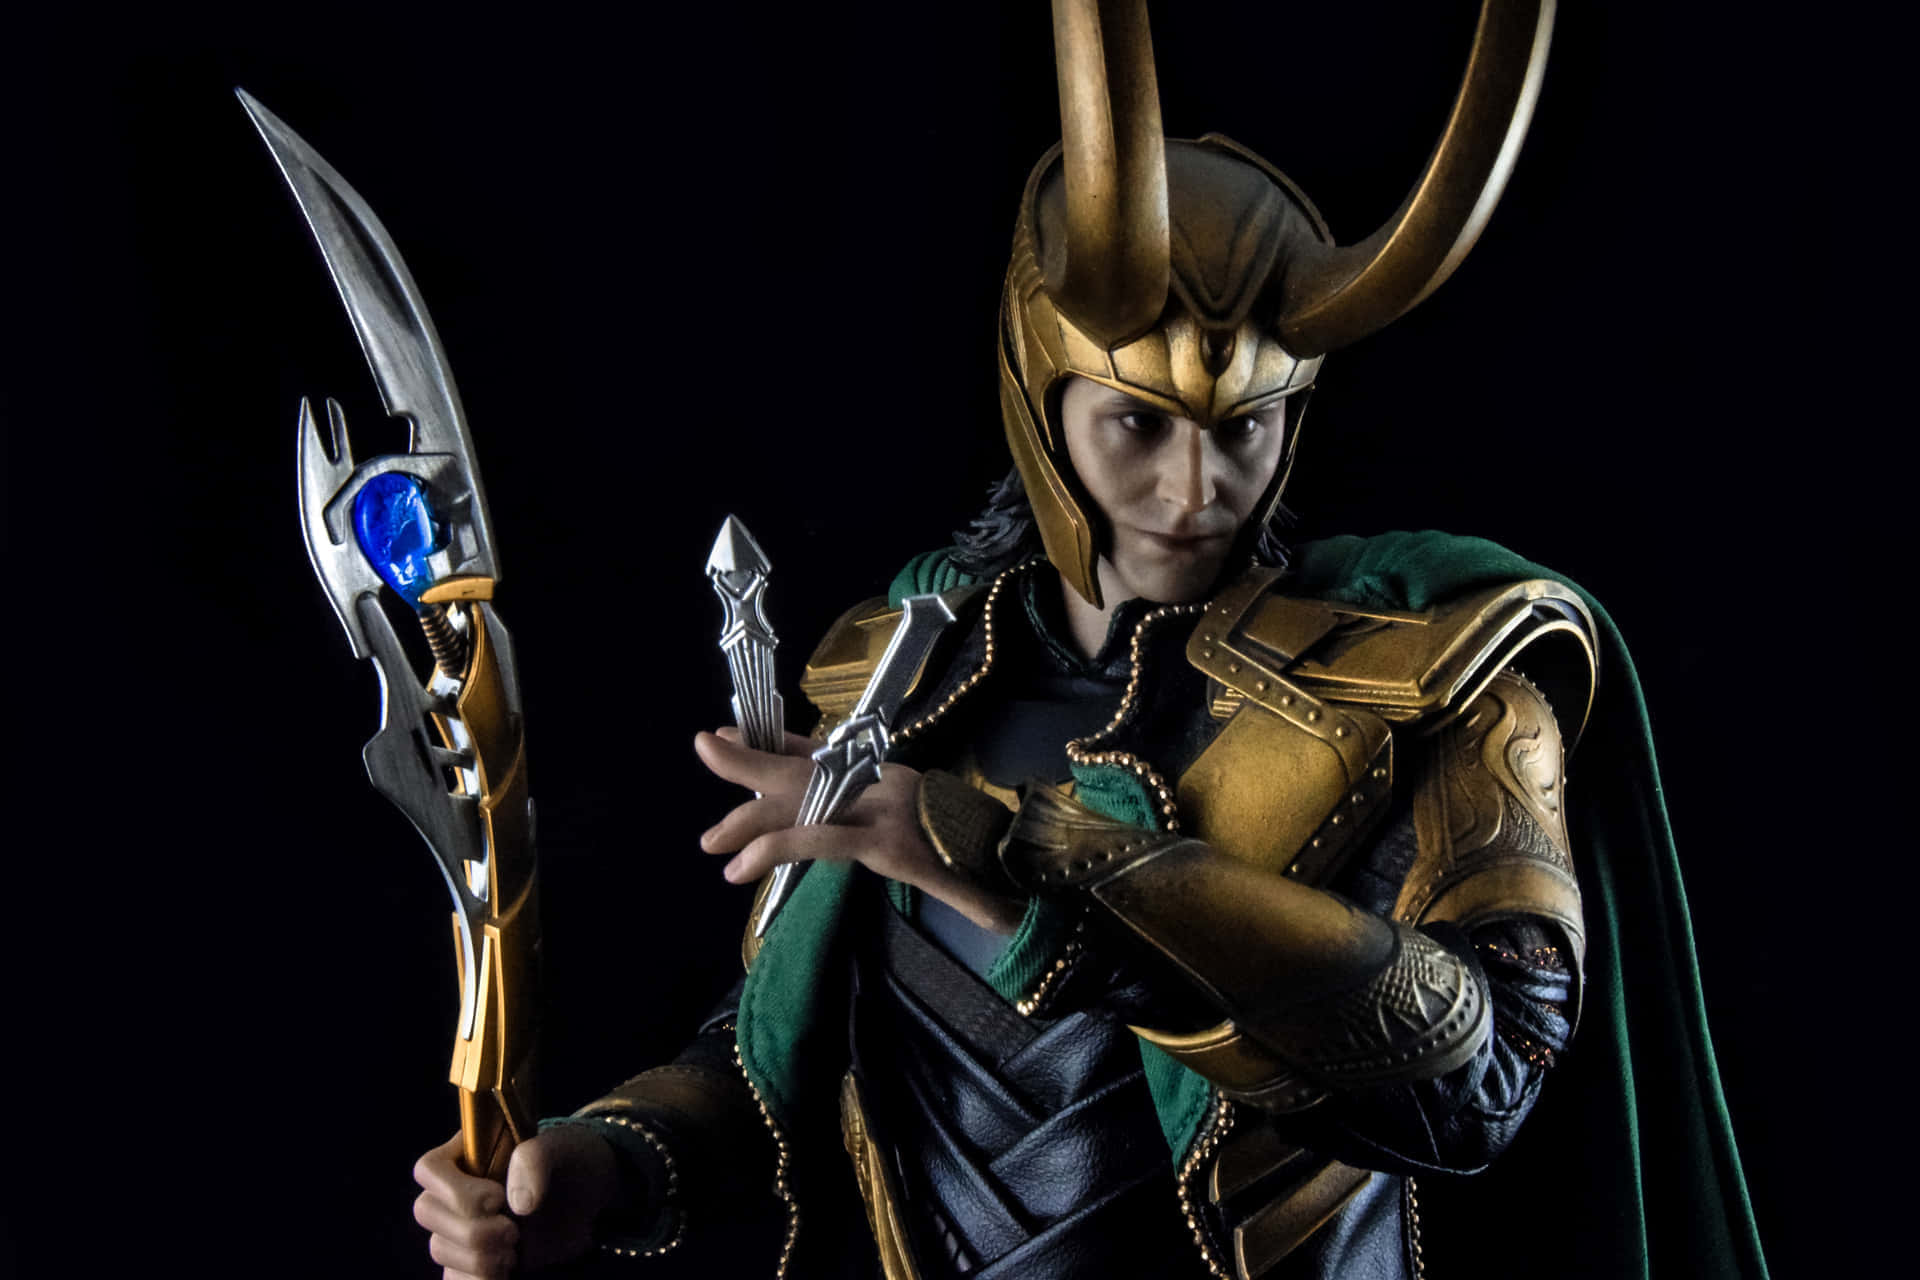 "Loki: Bringing Mischief and Chaos Everywhere"